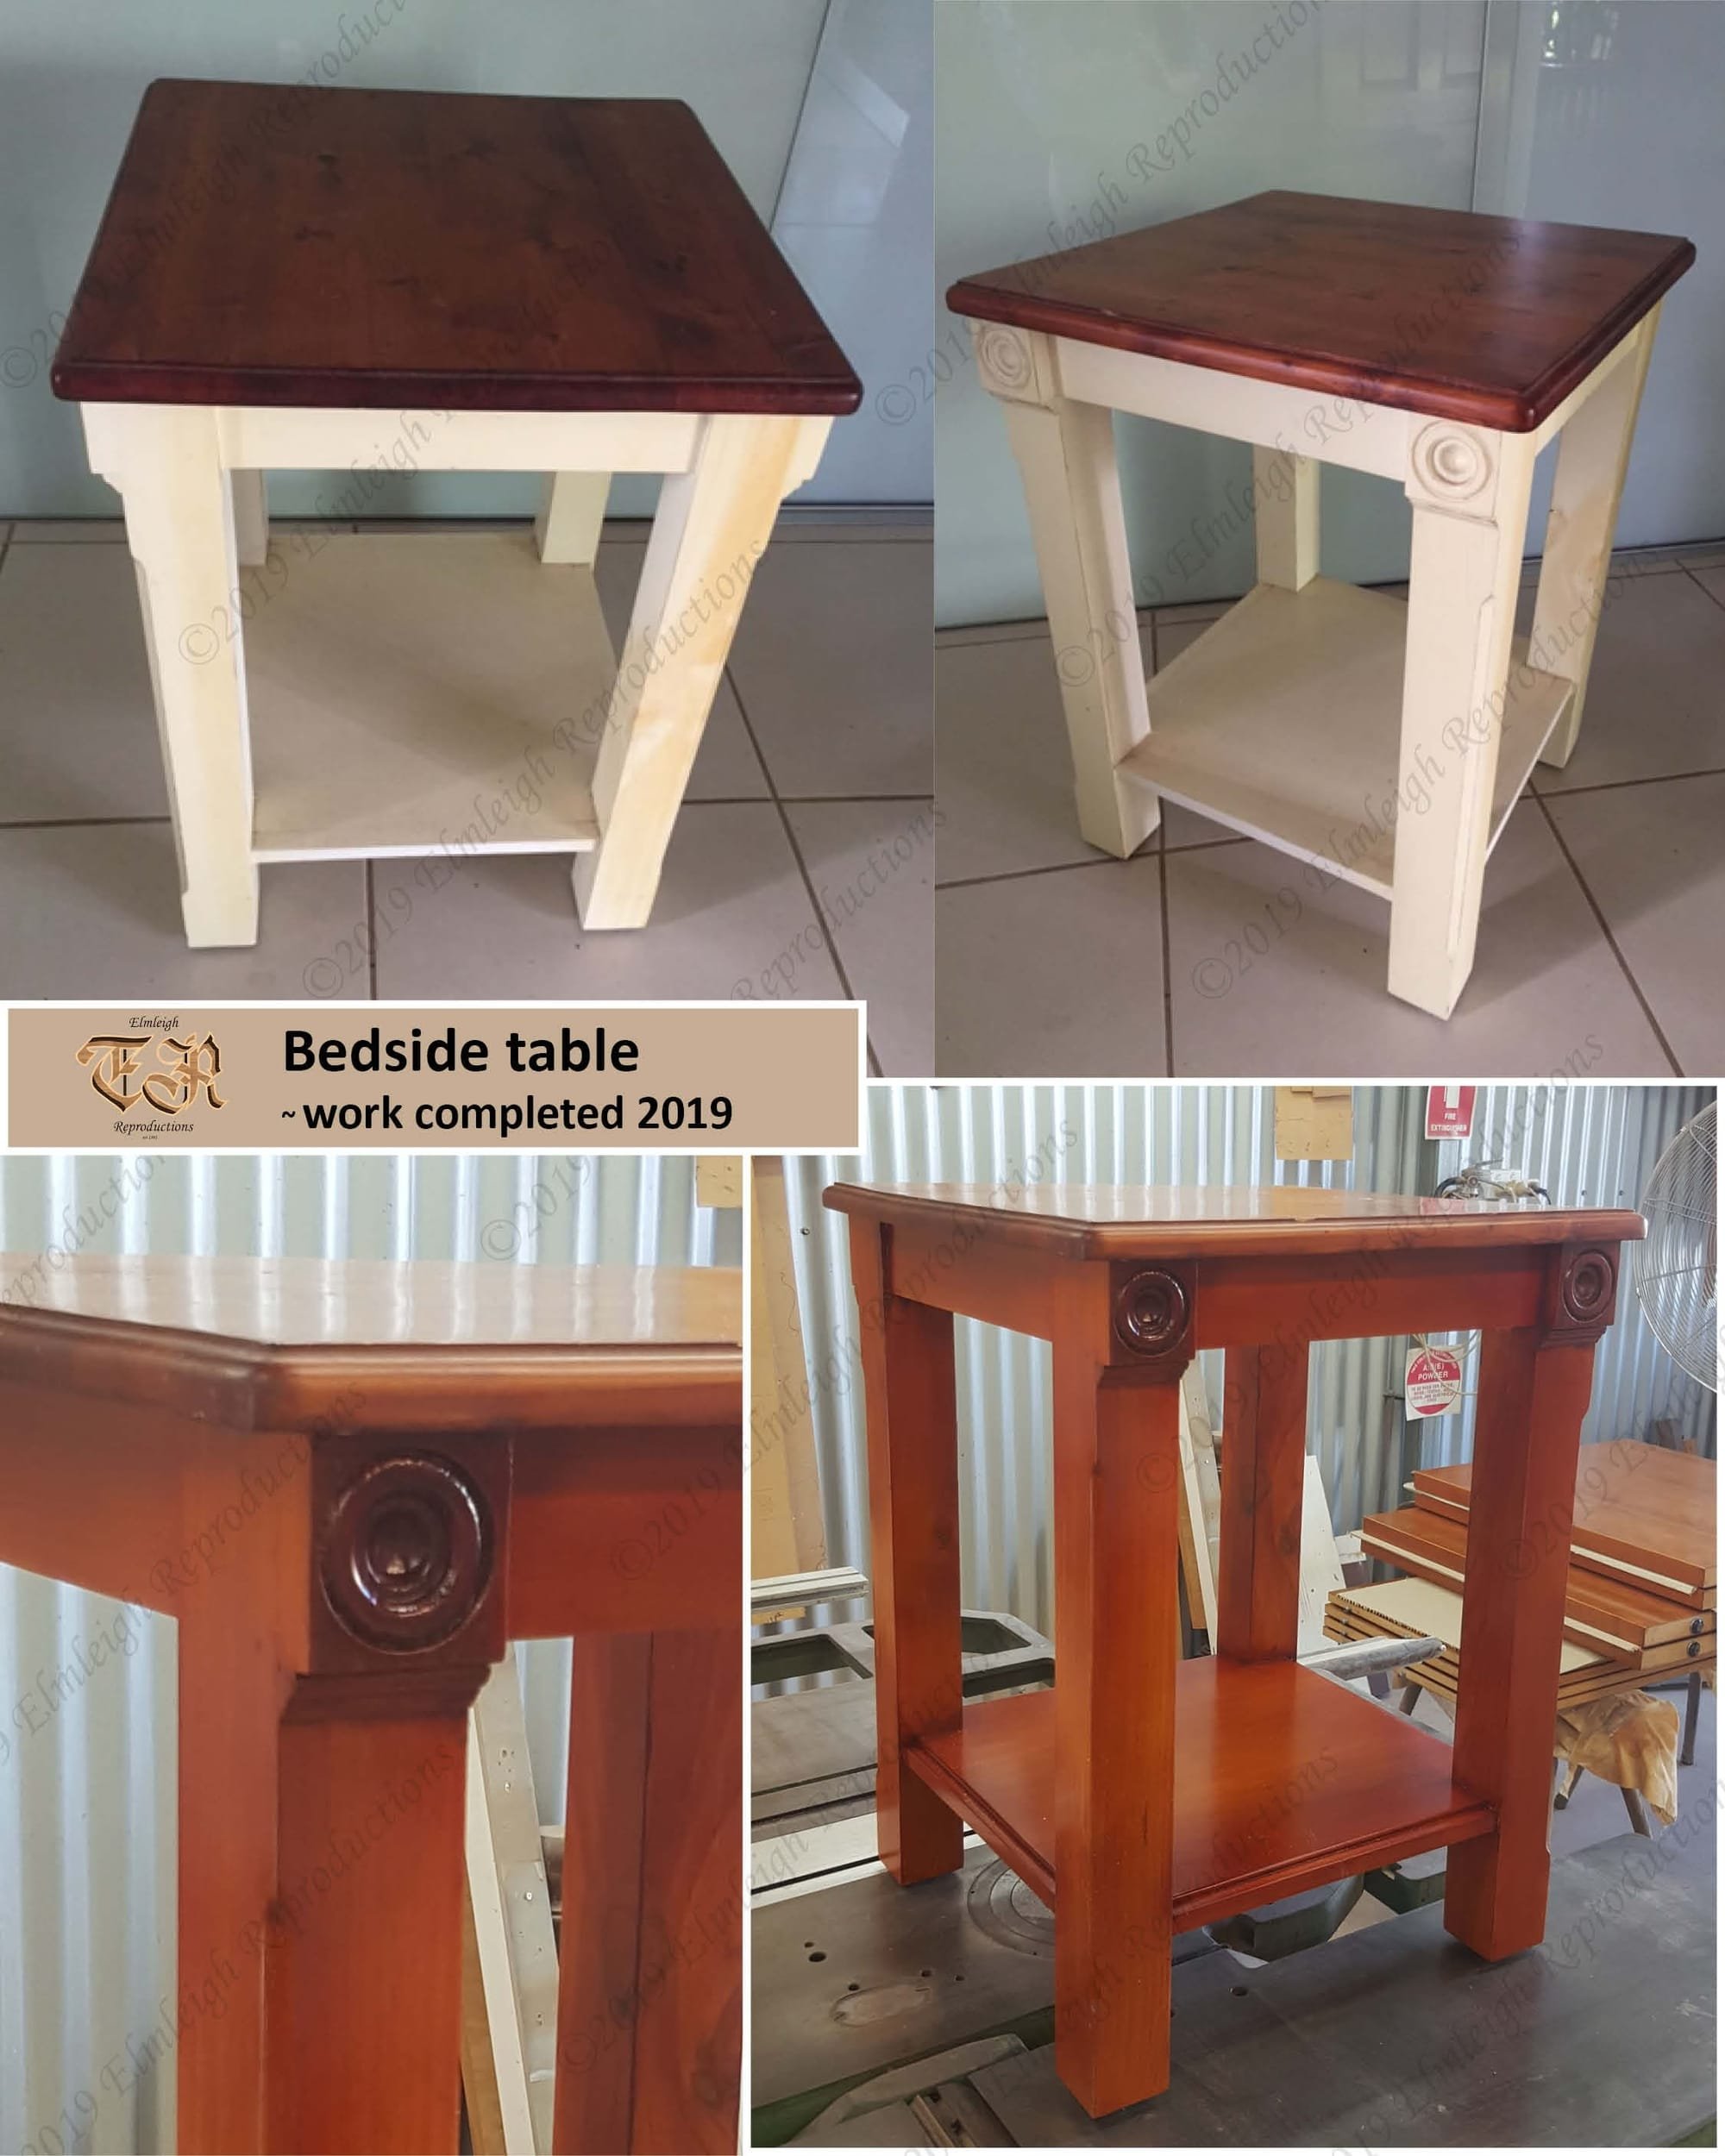 Pine bedside table